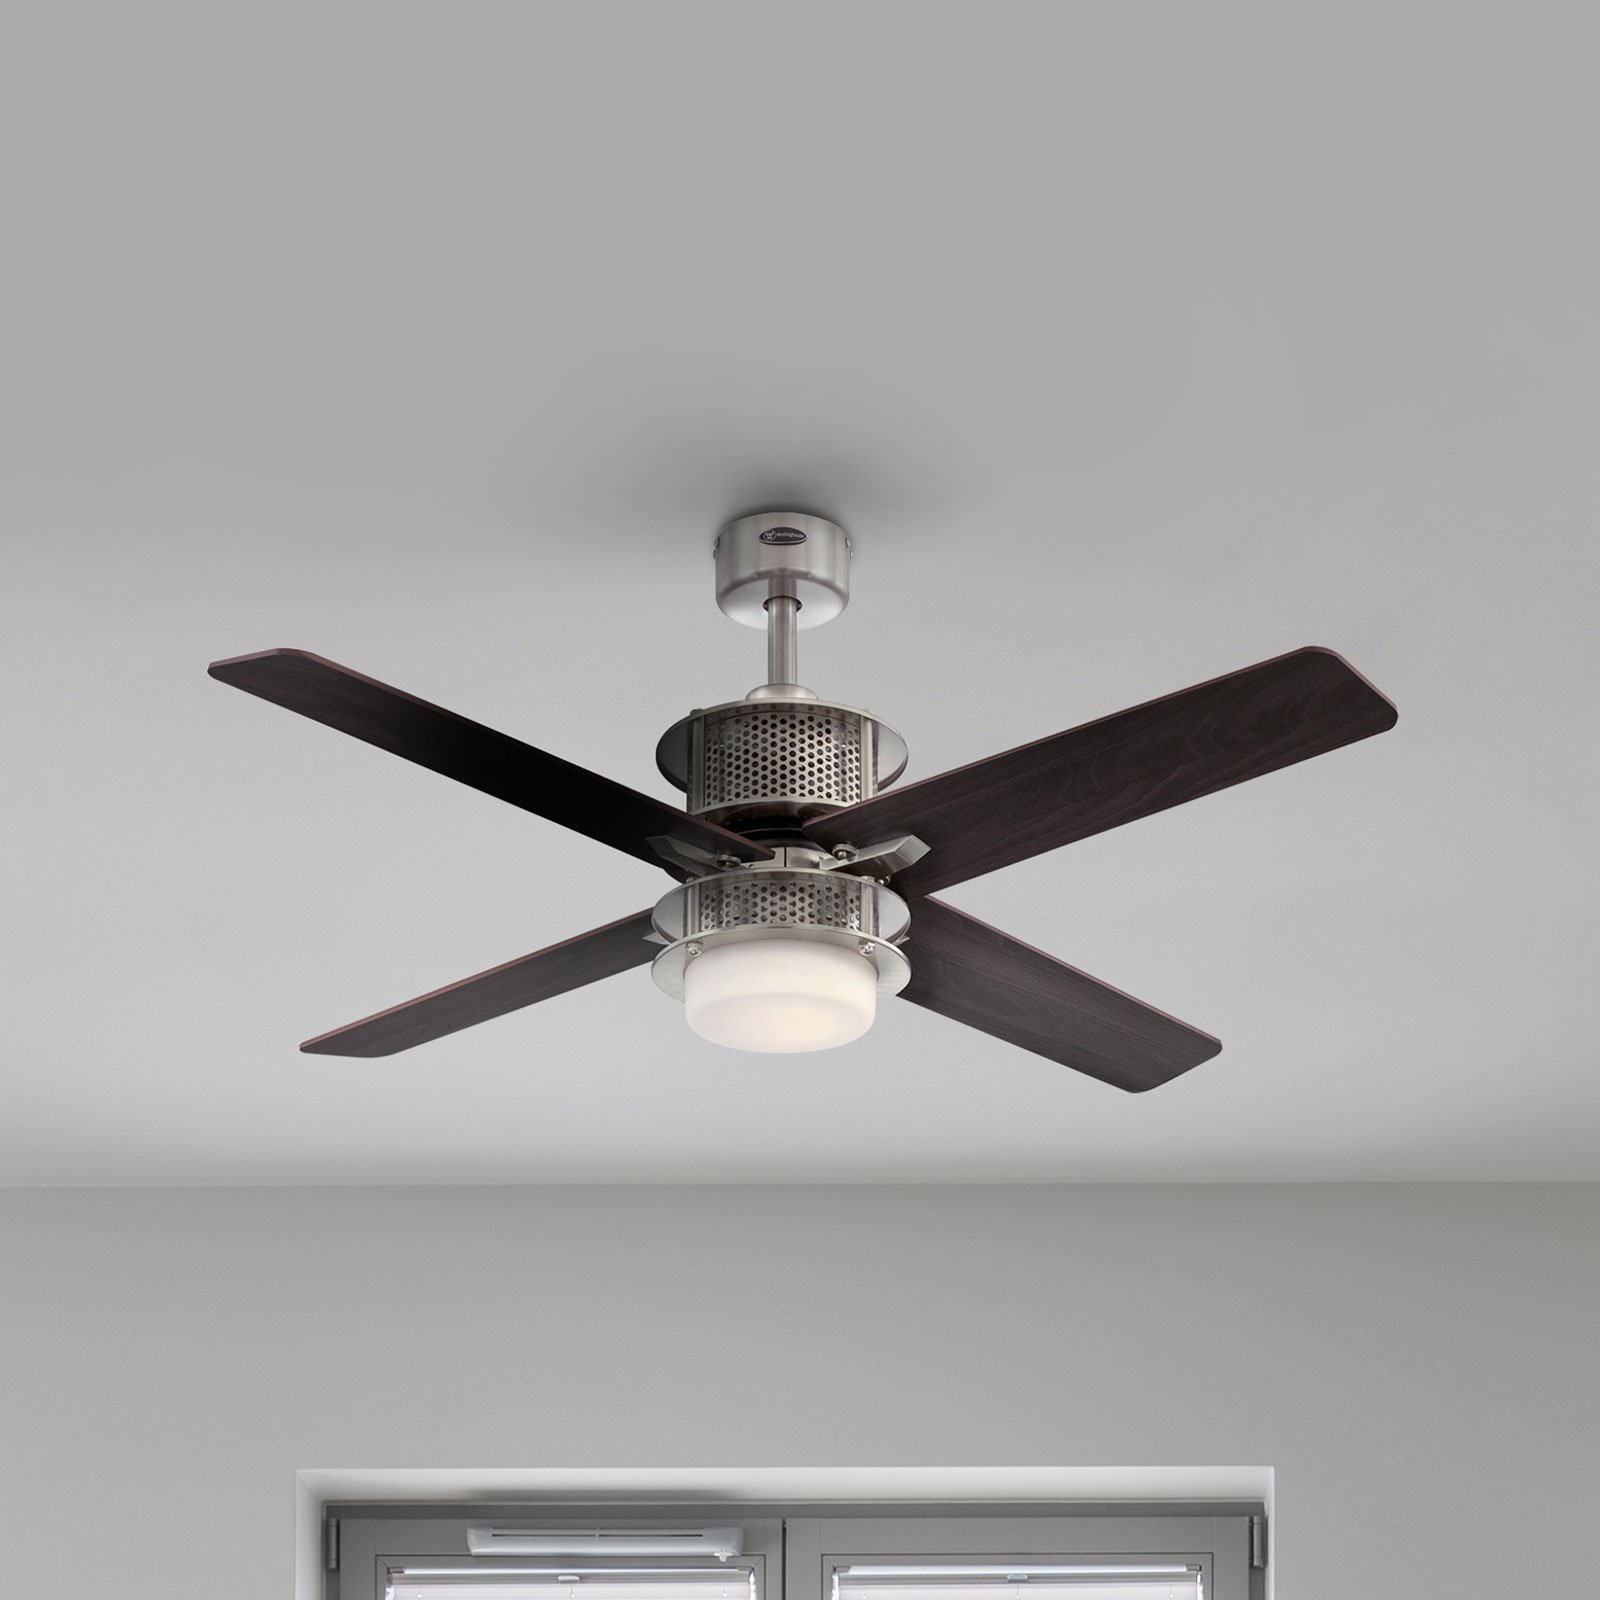 Westinghouse Oscar ceiling fan with LED